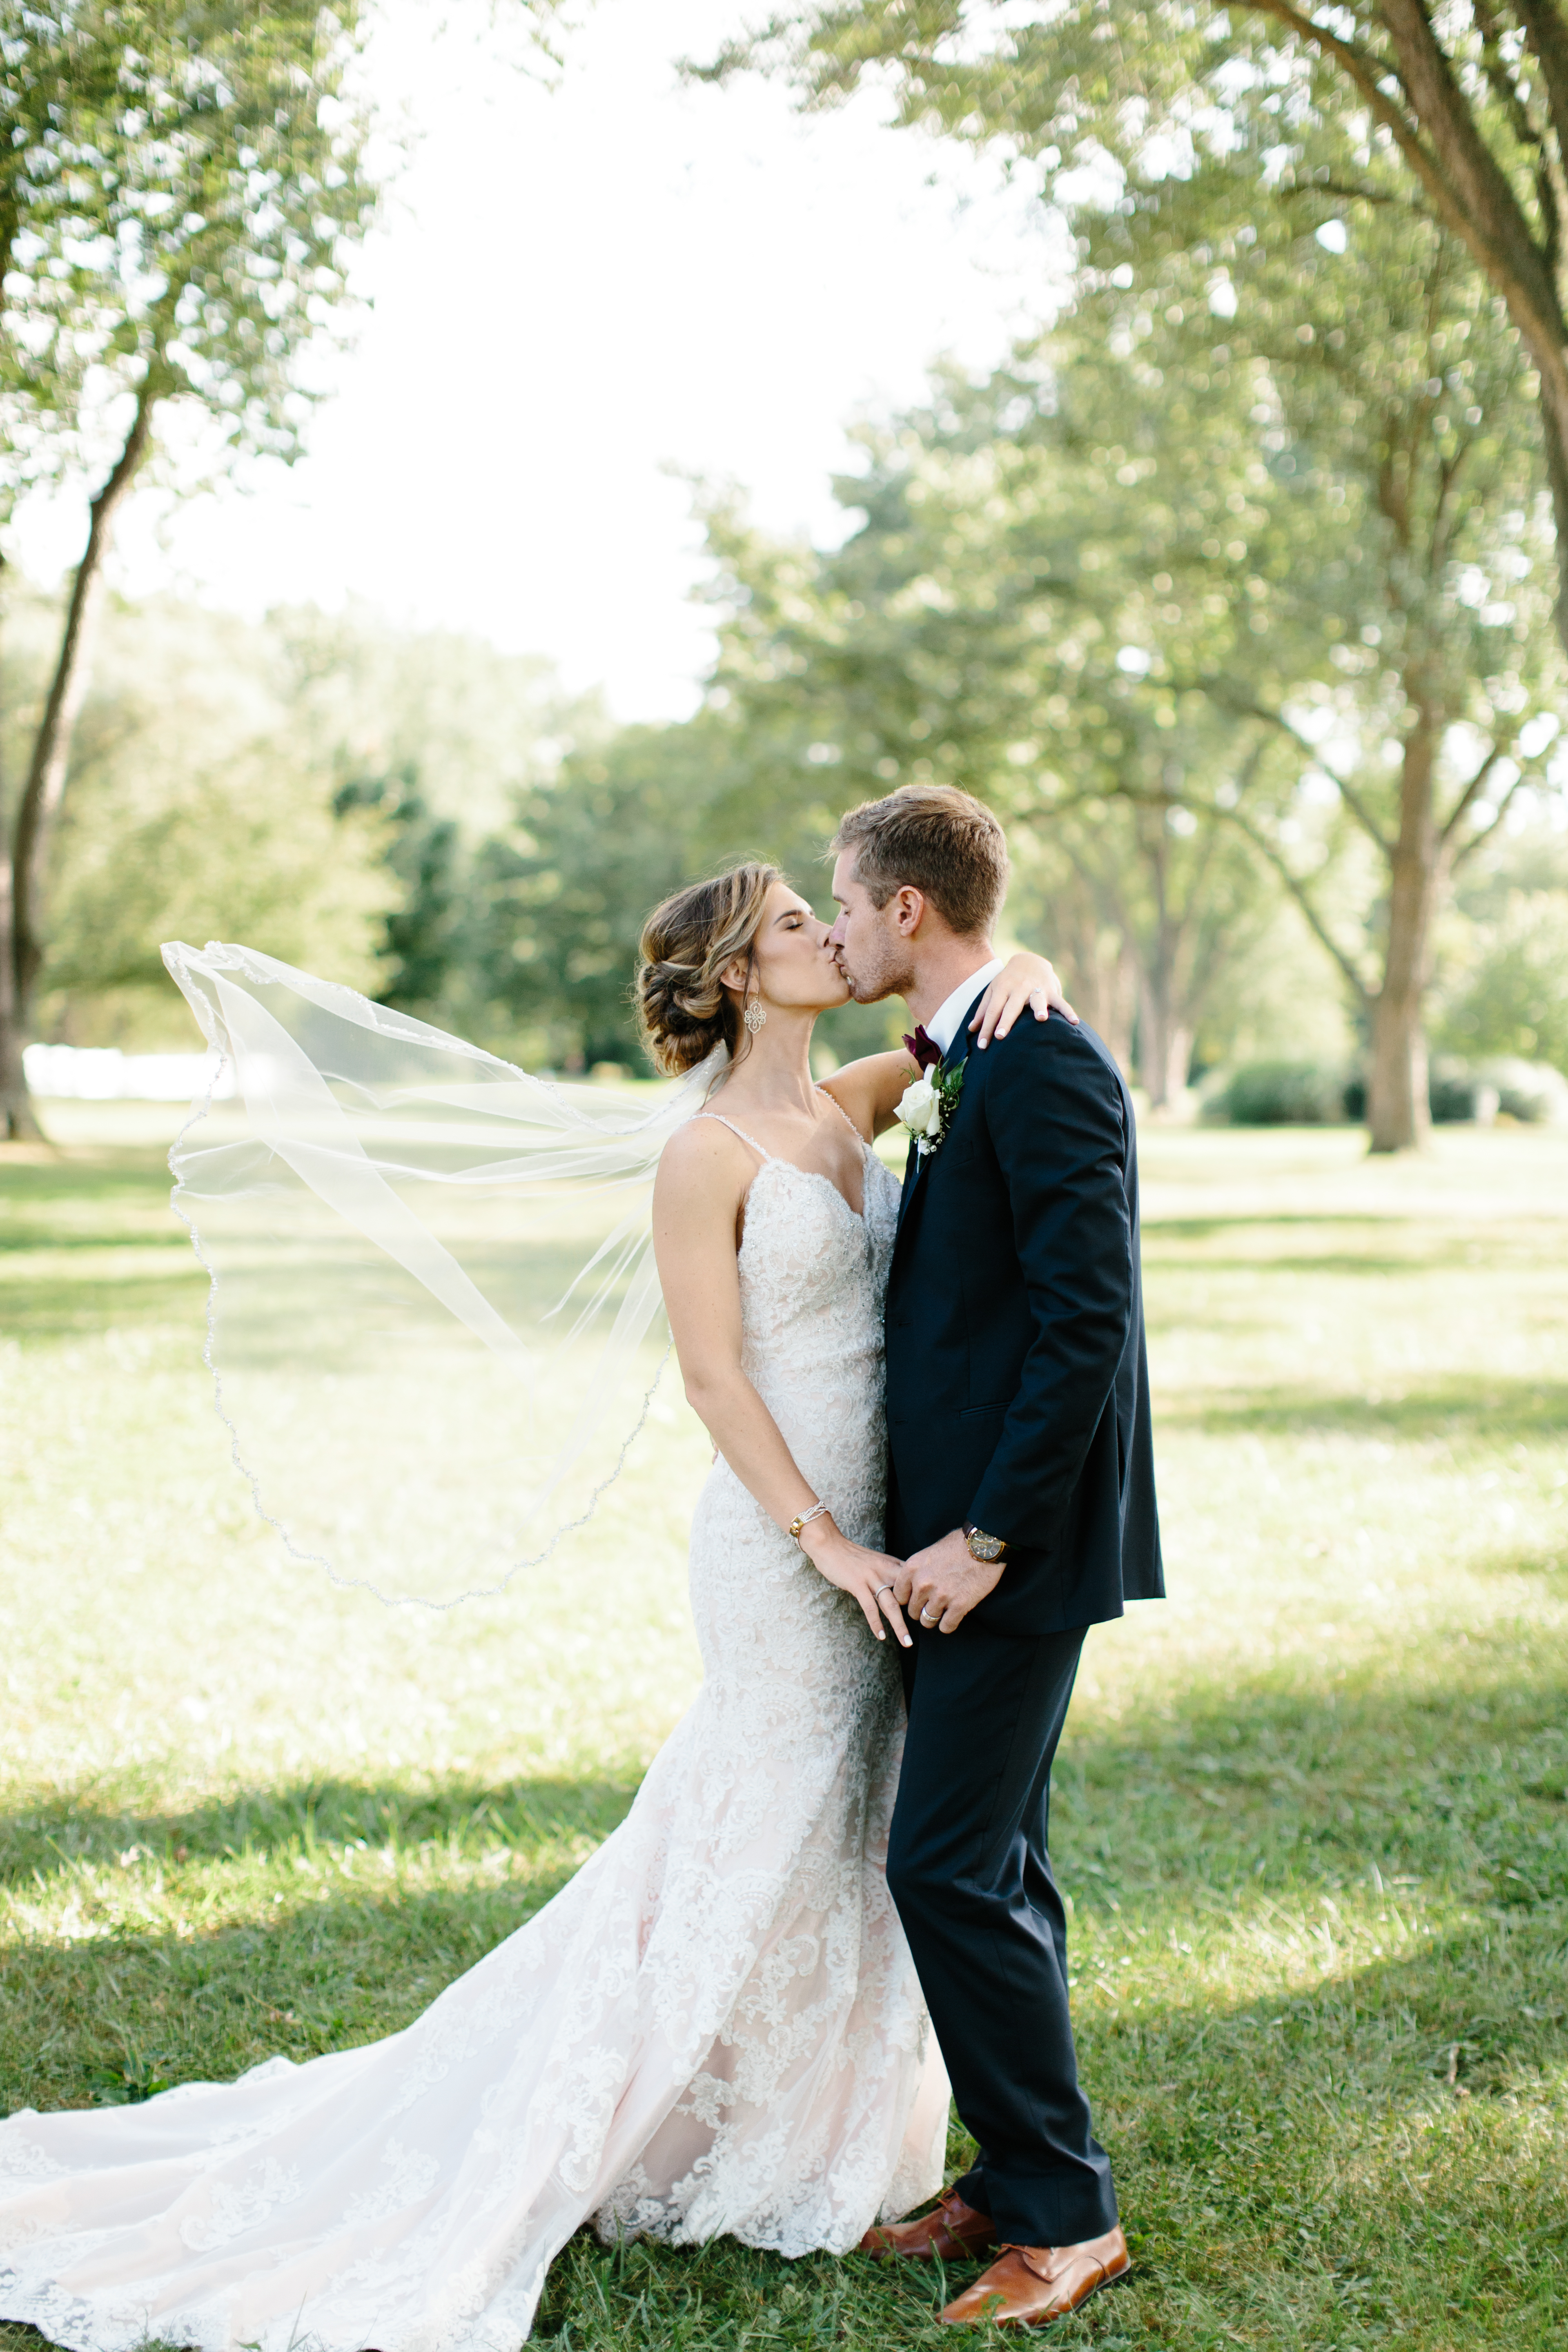 wind blows bride's veil while couple kiss